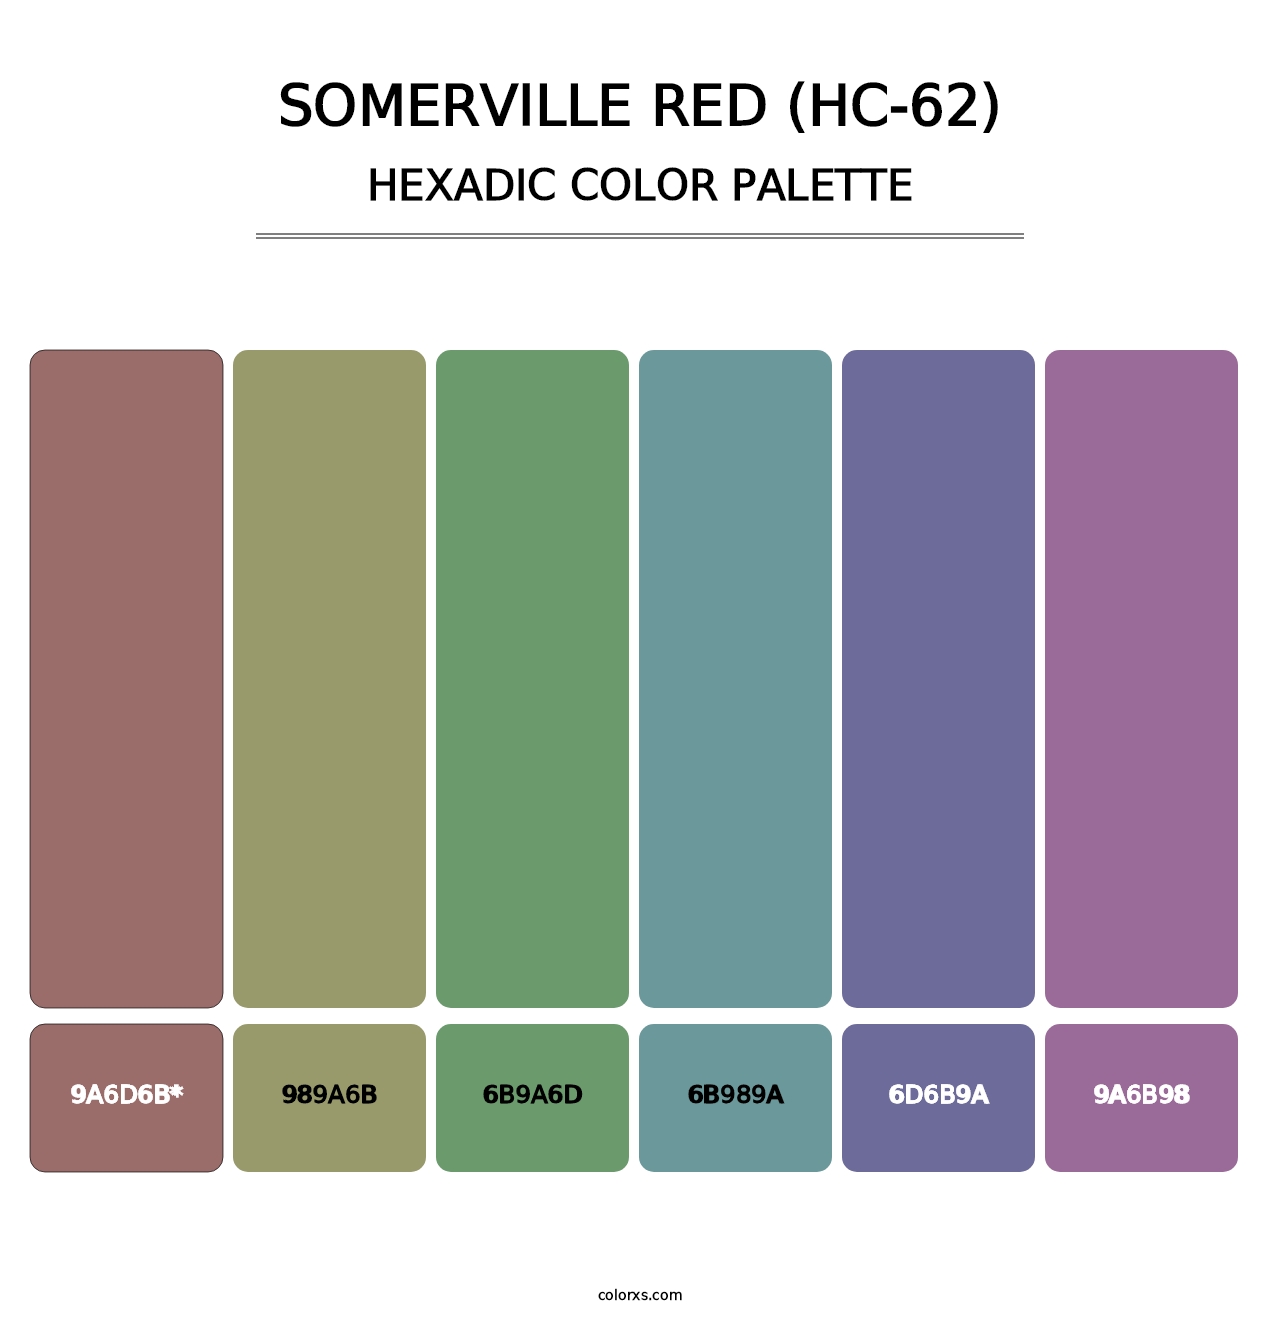 Somerville Red (HC-62) - Hexadic Color Palette